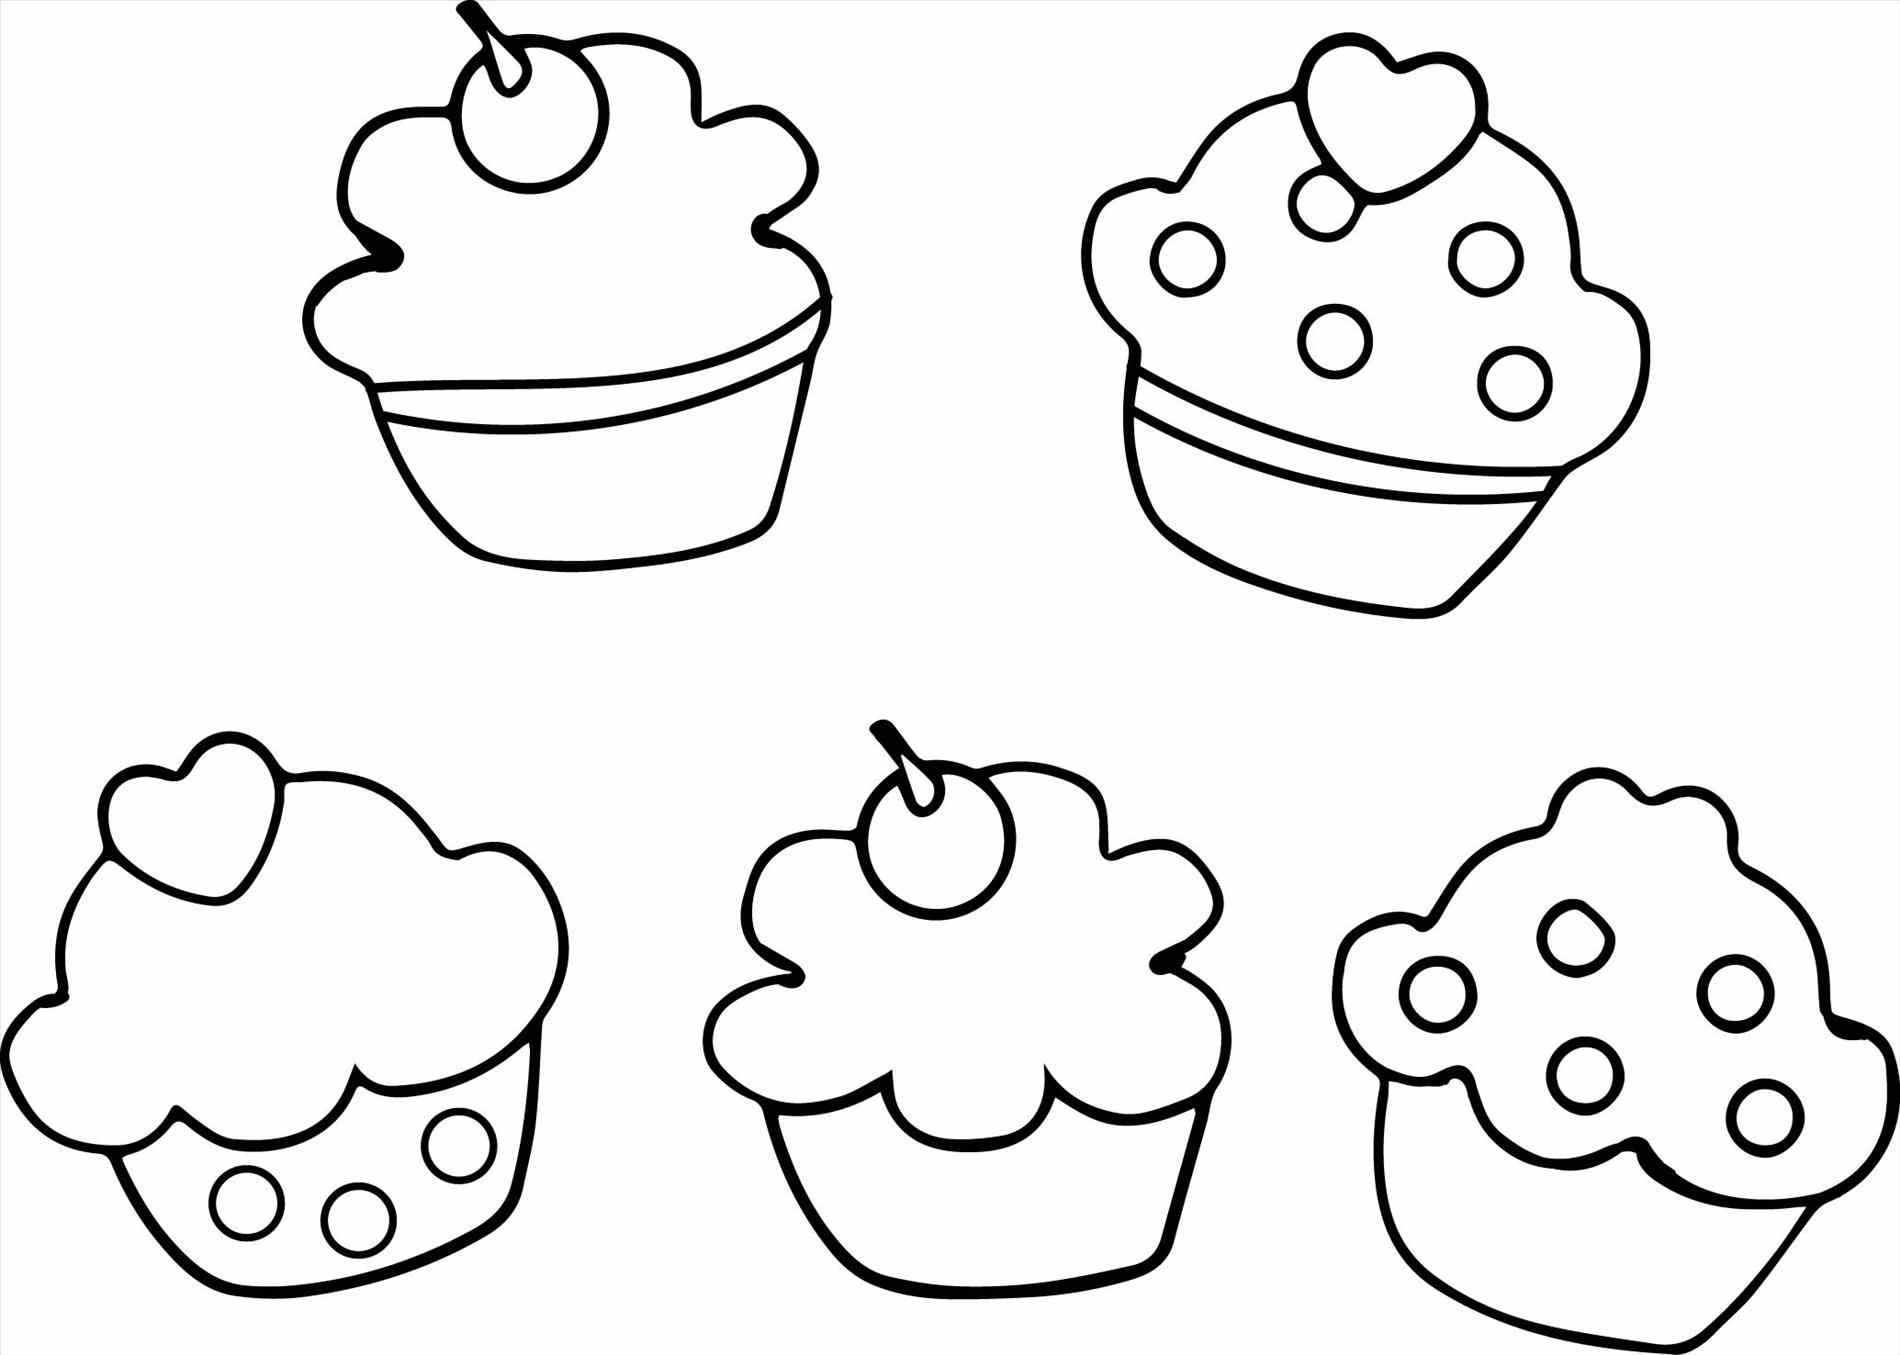 Printable Cupcake Coloring Pages at GetColorings.com ...